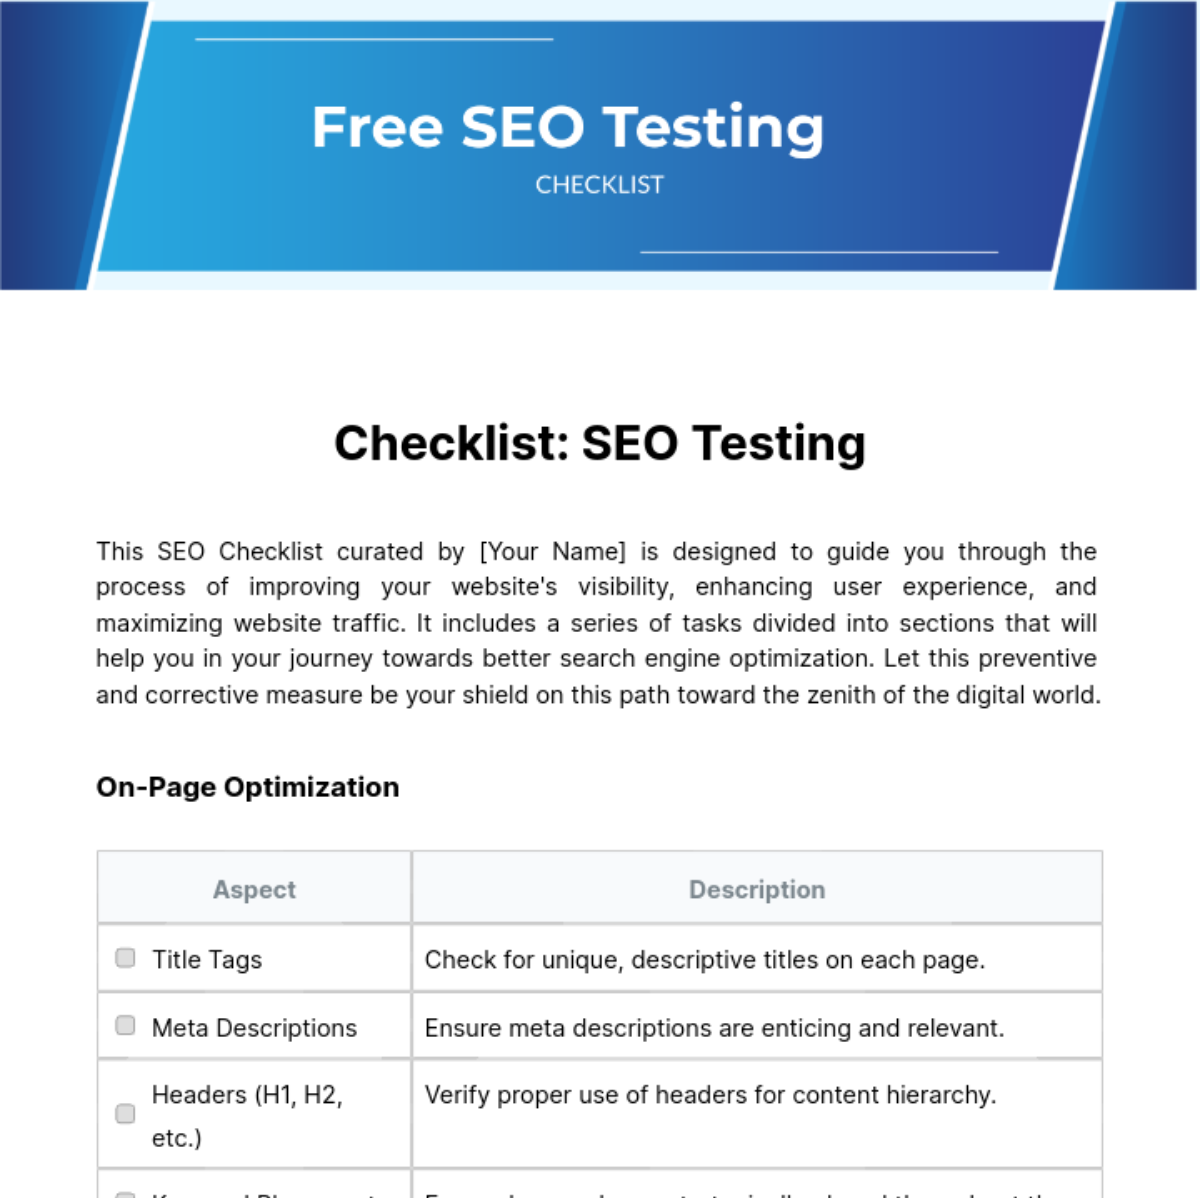 SEO Testing Checklist Template